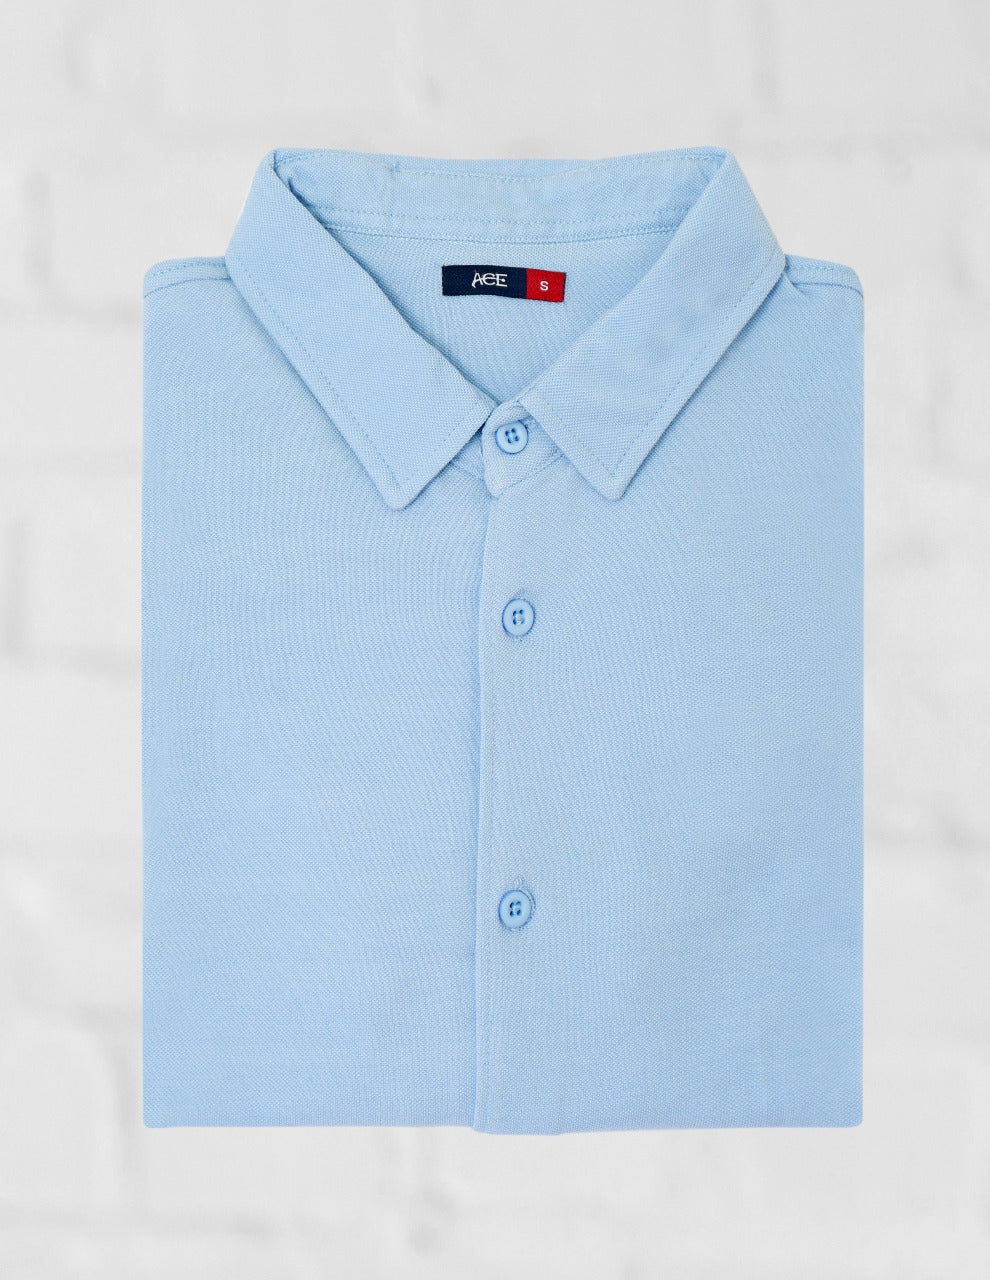 Men's Blue Full Sleeve Casual Shirt - ACE 70090C (W20)